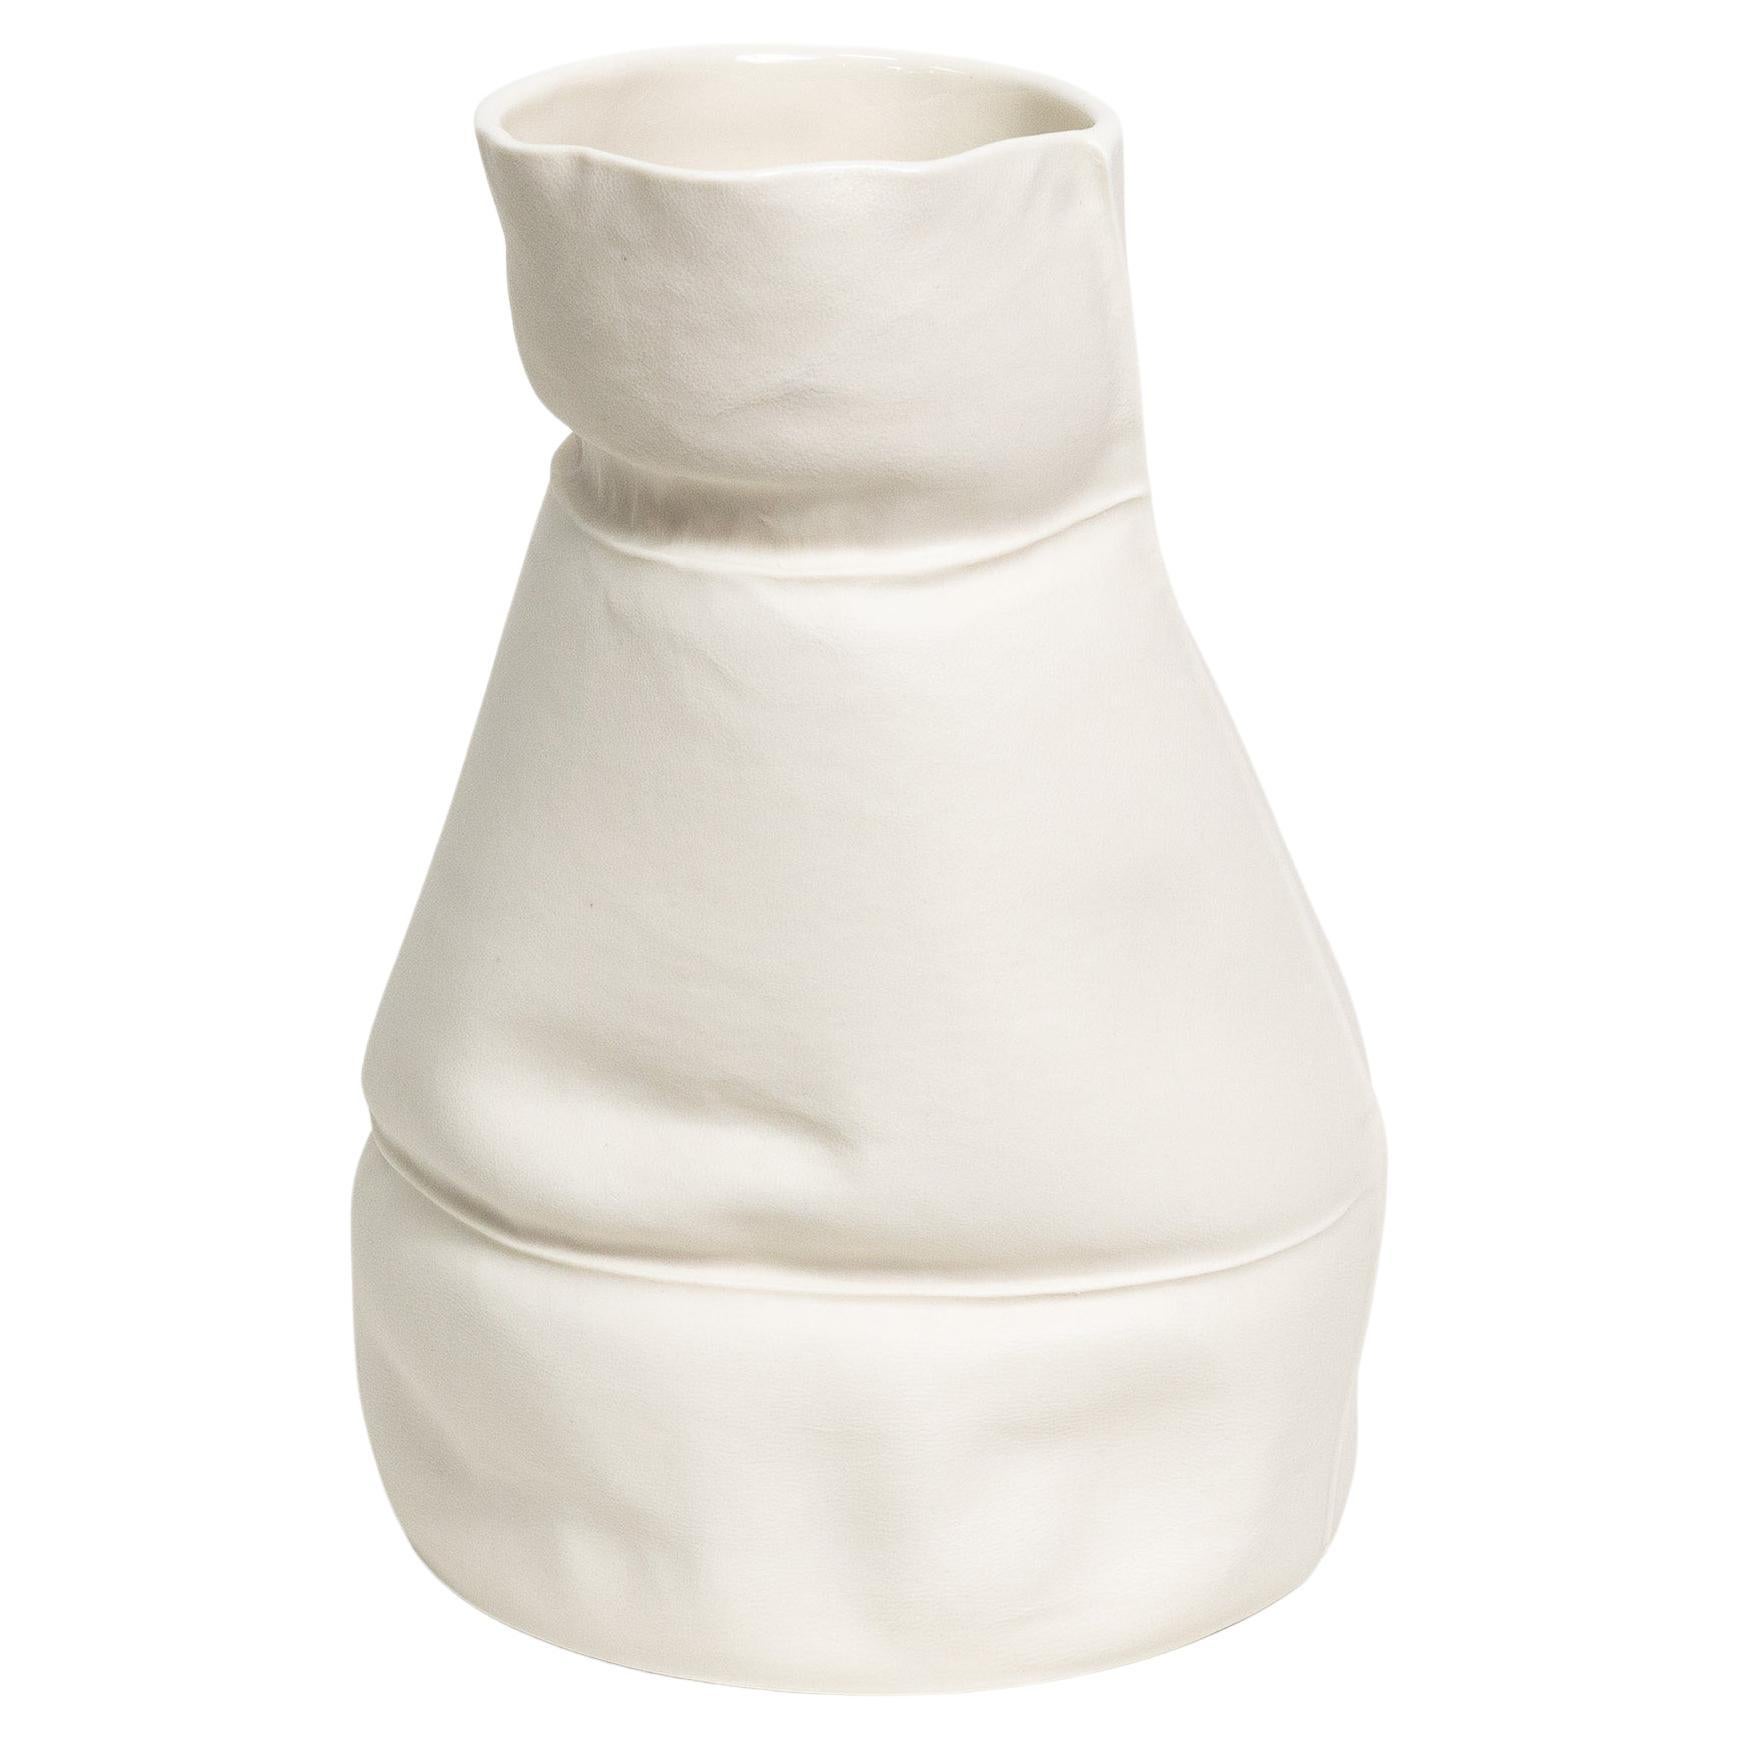 Kawa-Blumengefäß aus weißer Keramik, #16, Porzellan in Lederguss